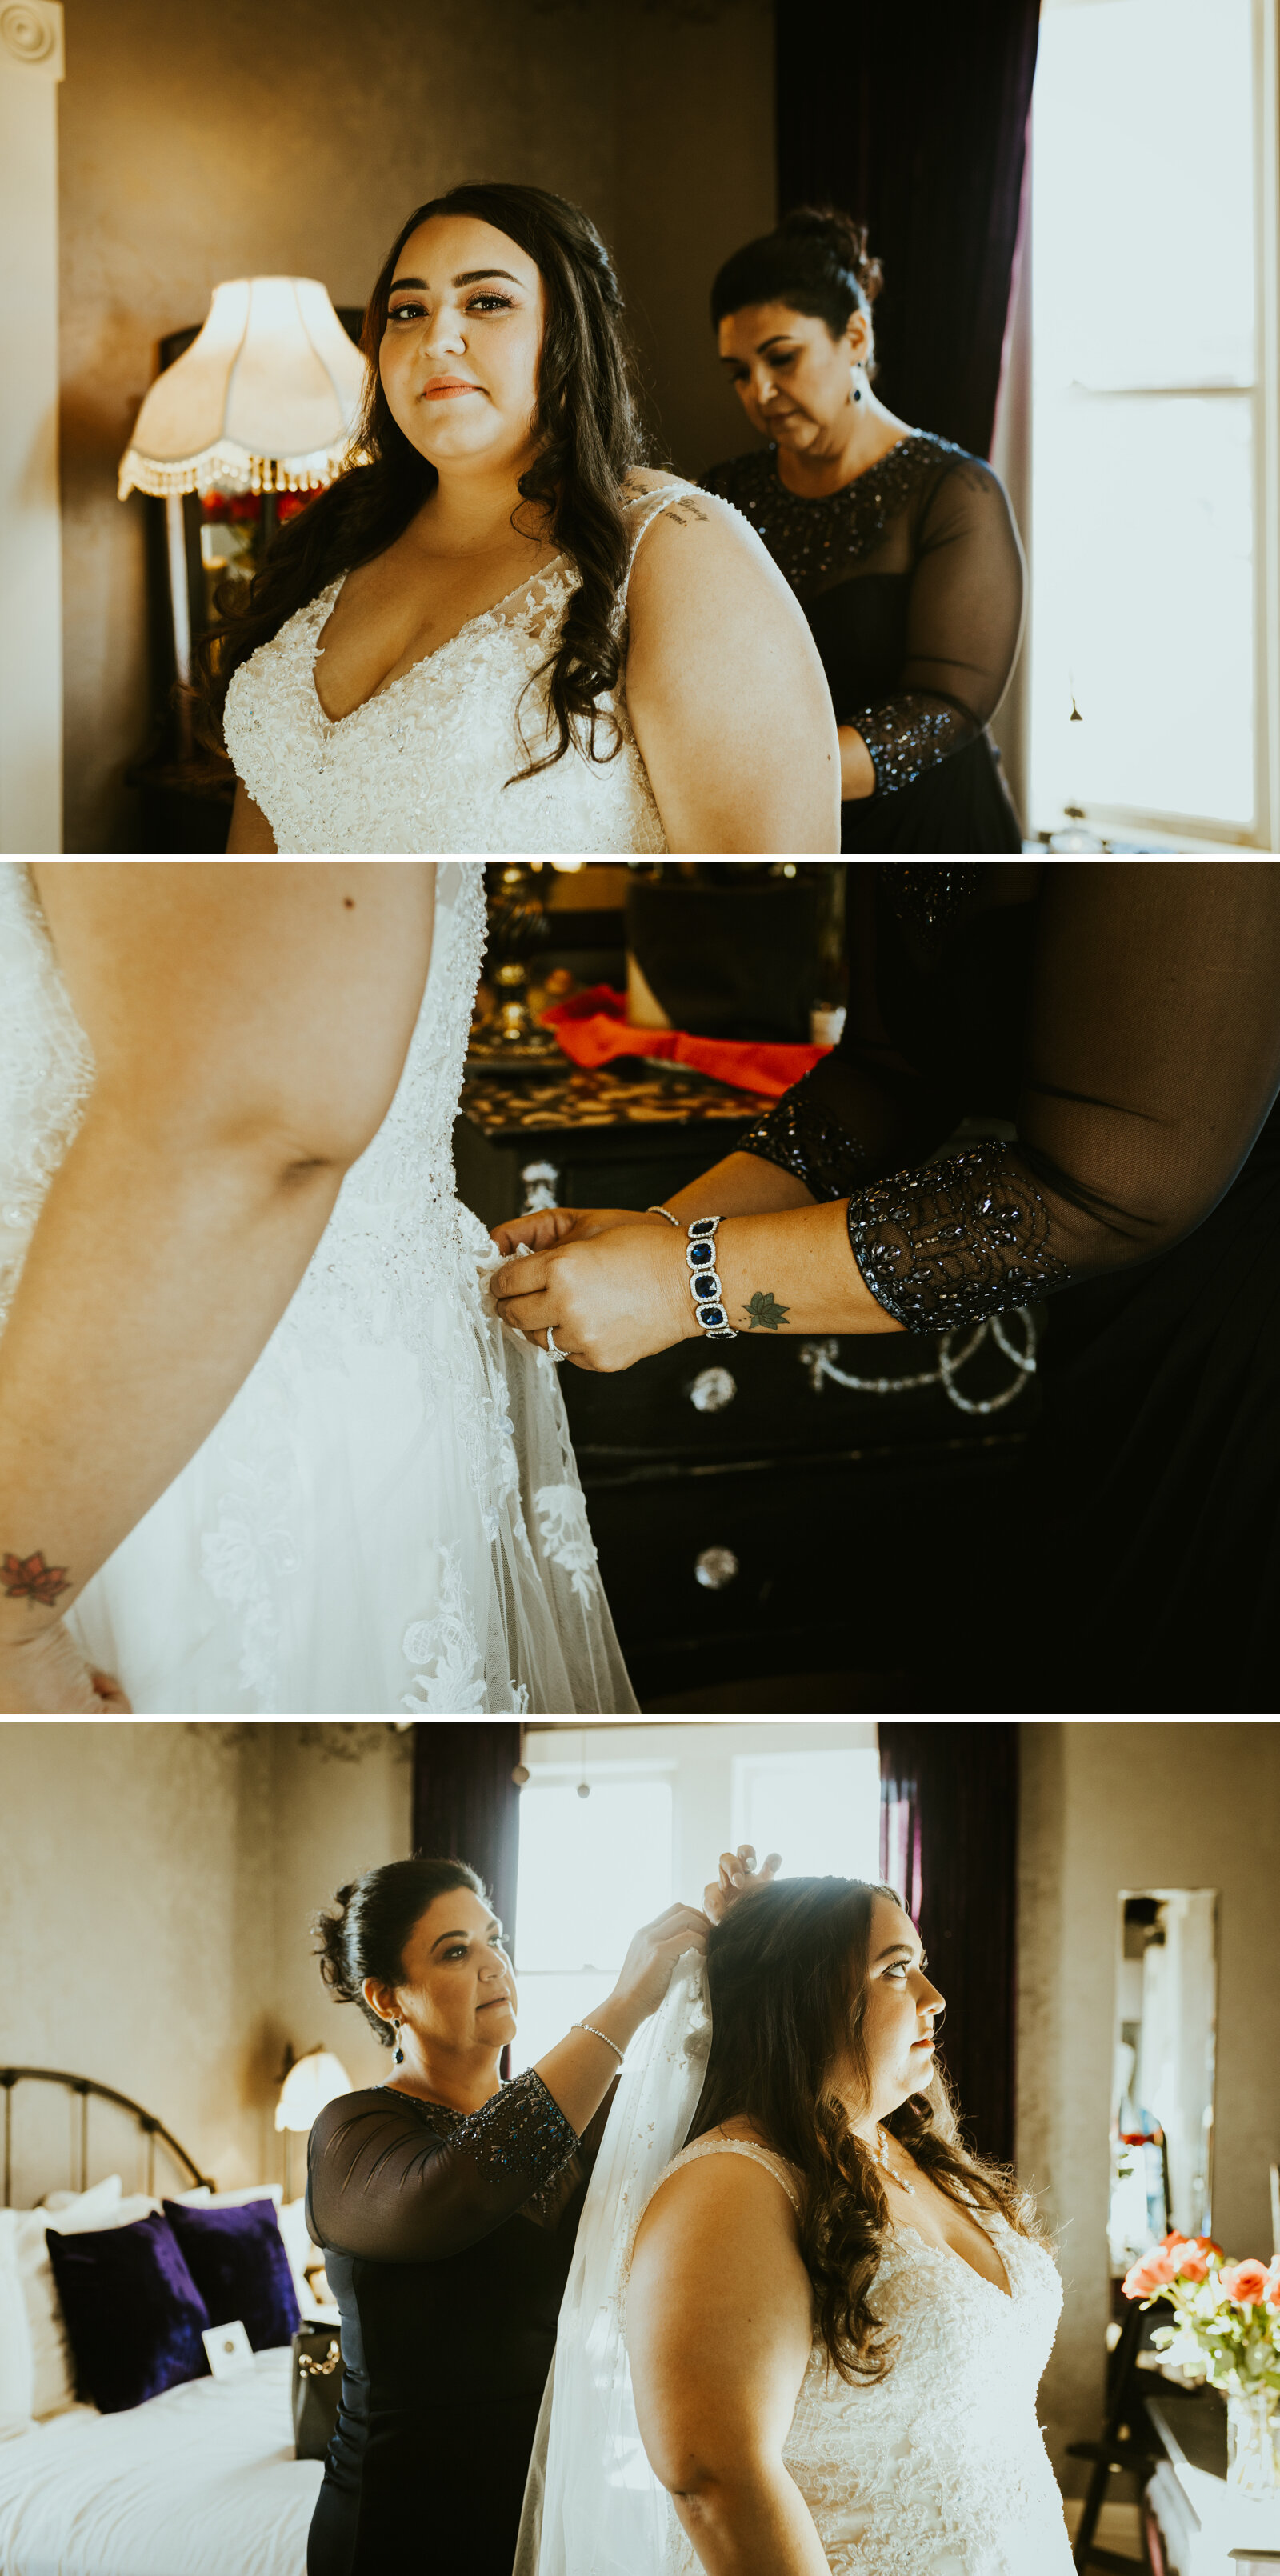 GRAND HIGHLAND HOTEL PRESCOTT ARIZONA WEDDING PHOTOGRAPHY BRIDE GETTING READY.jpg